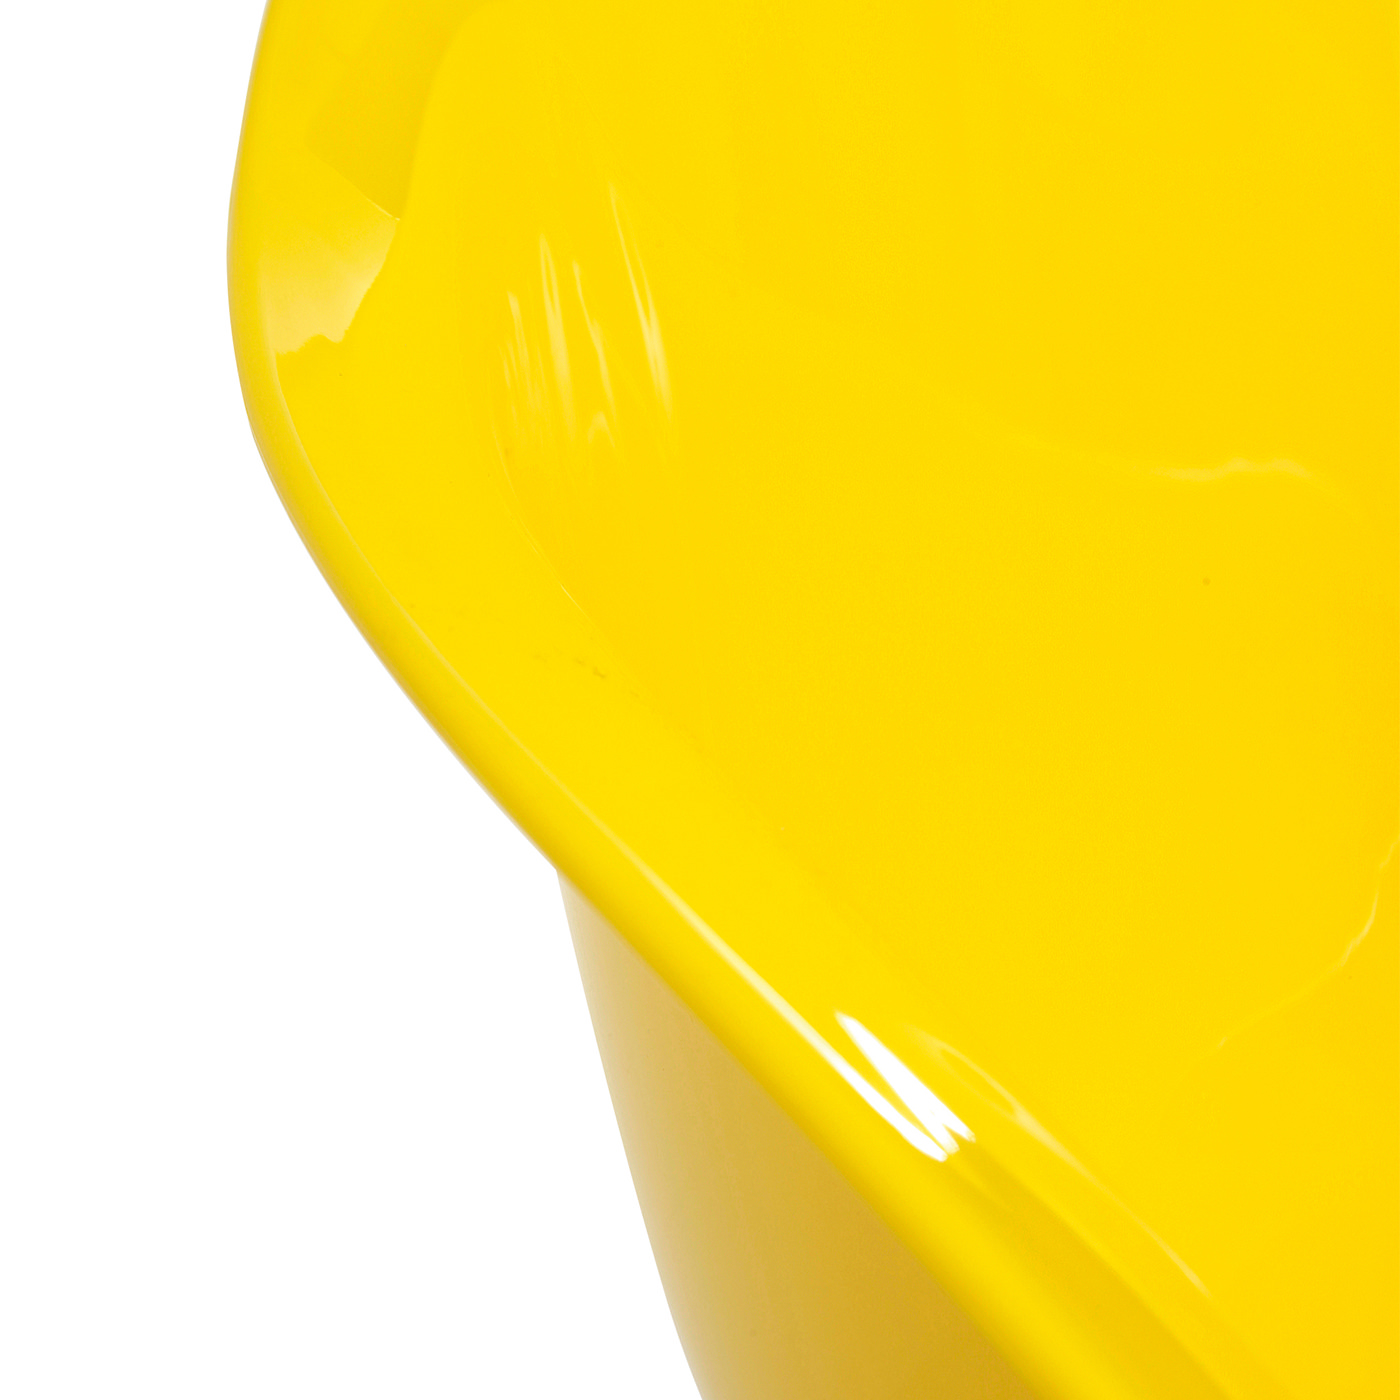 HI 1353 104 3 – Chair W Armrest Forum Chrome Yellow (4)